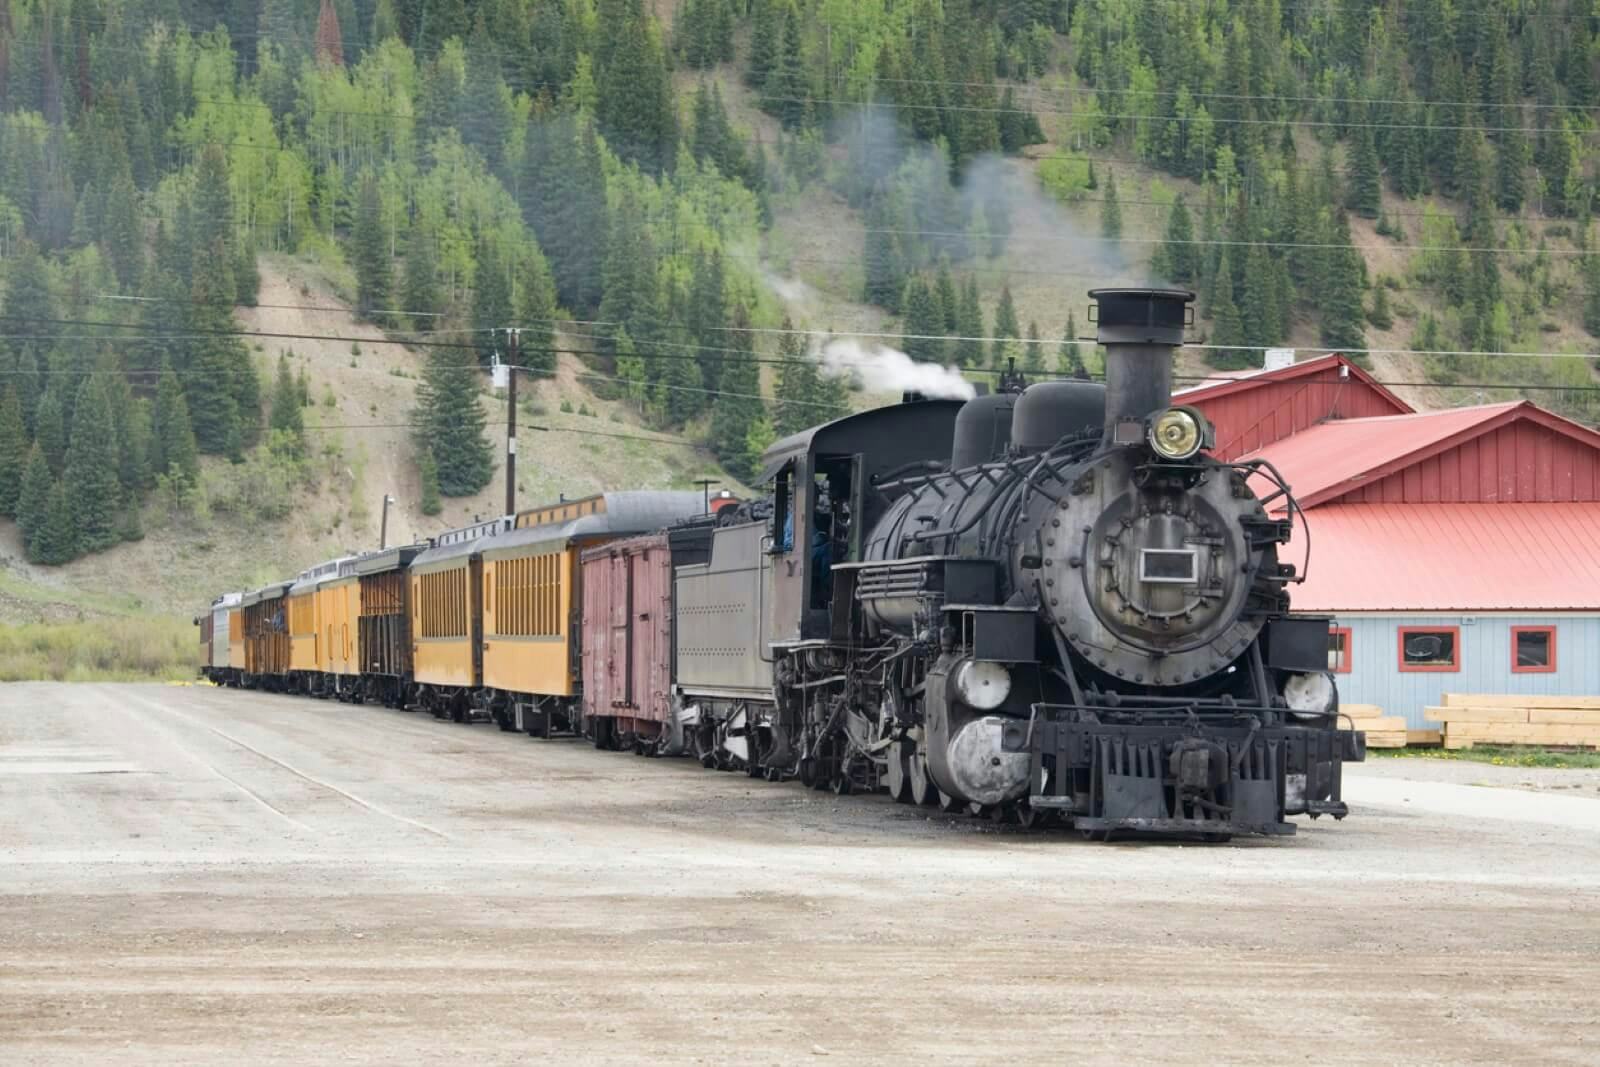 The historic Durango and Silverton Narrow Gauge Railroad steam engine in Colorado